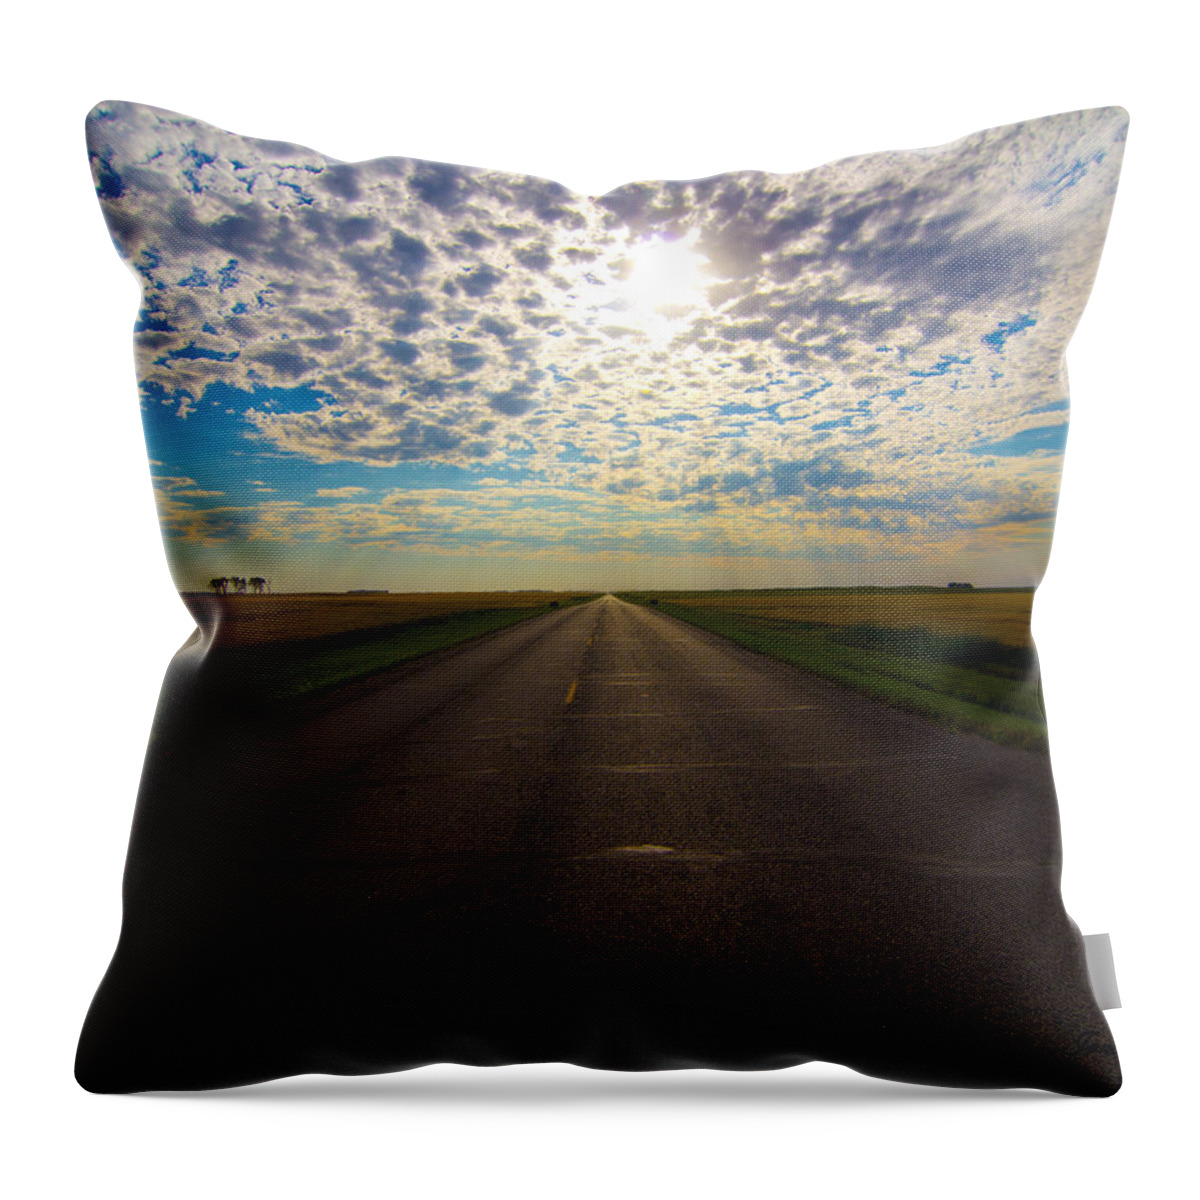 Highway Throw Pillow featuring the photograph Endless Highway by Jana Rosenkranz